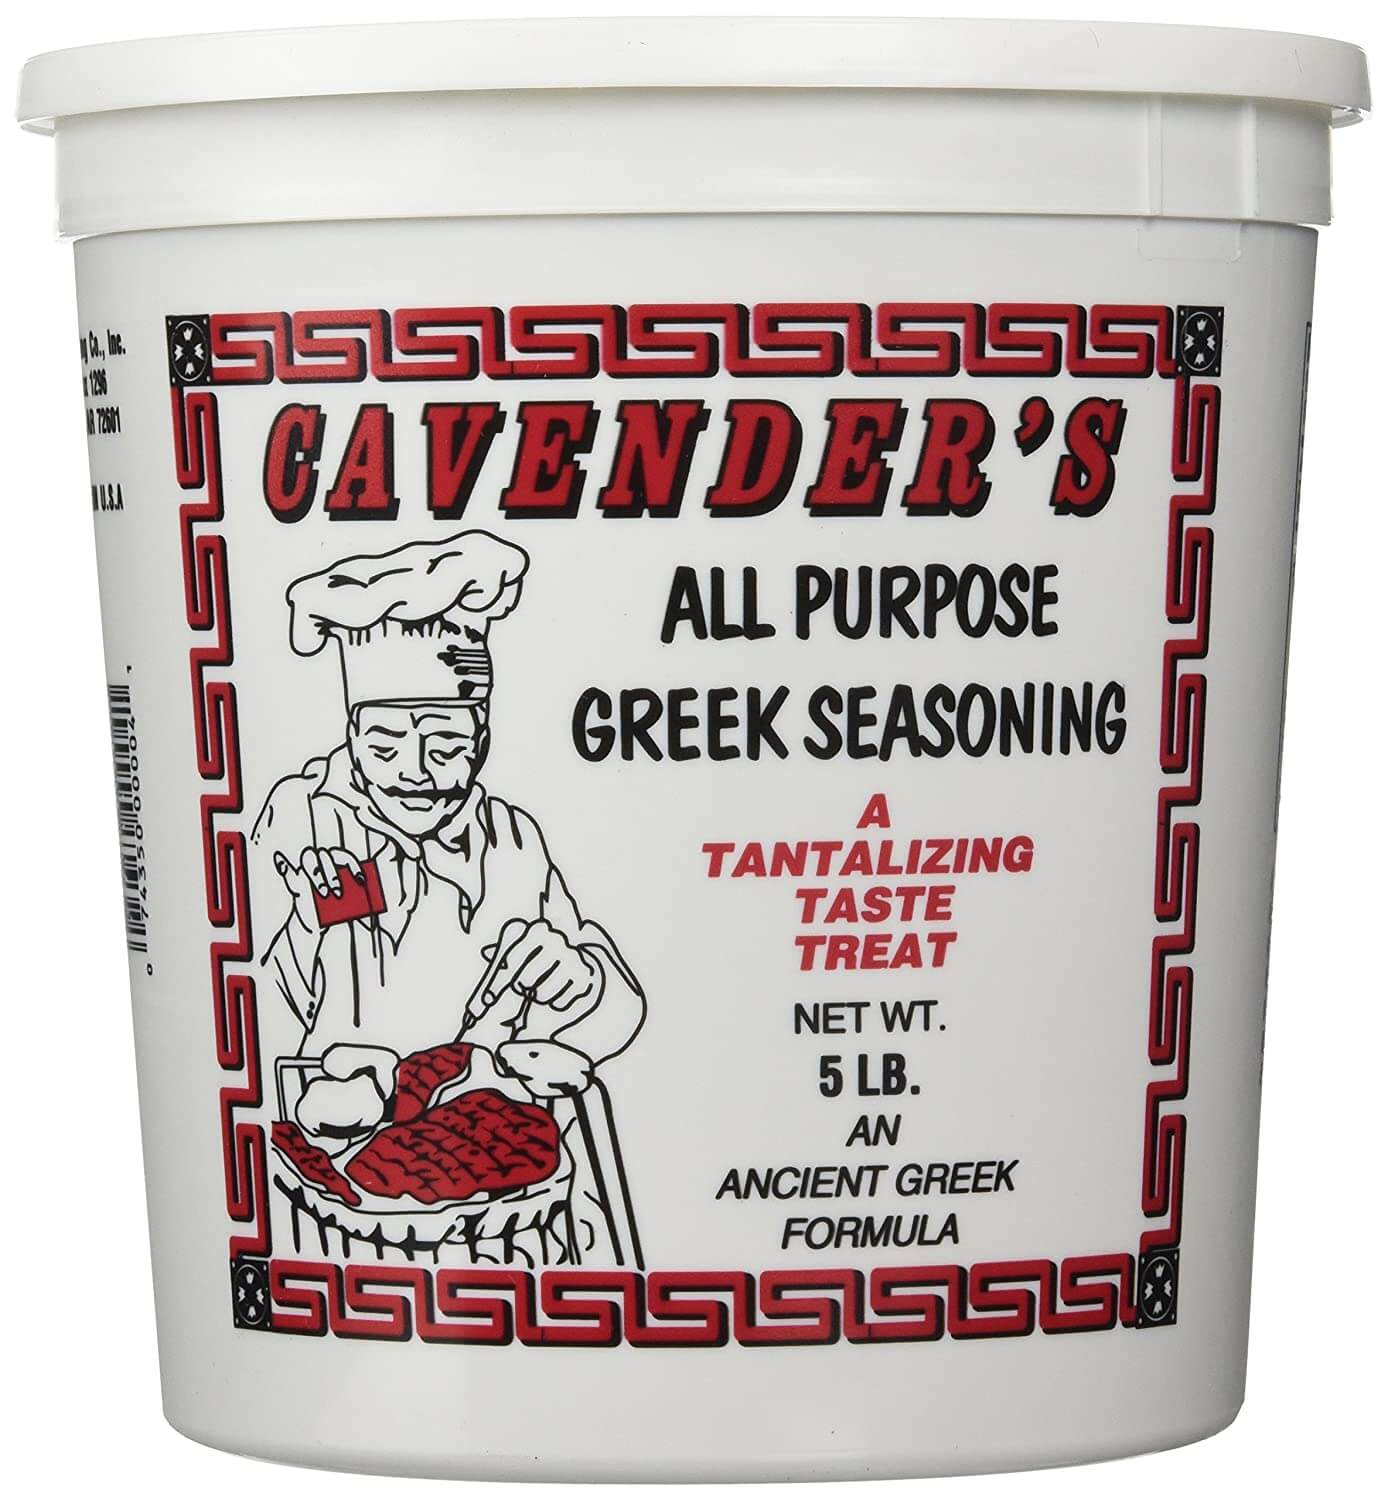 Cavender’s All Purpose Greek Seasoning